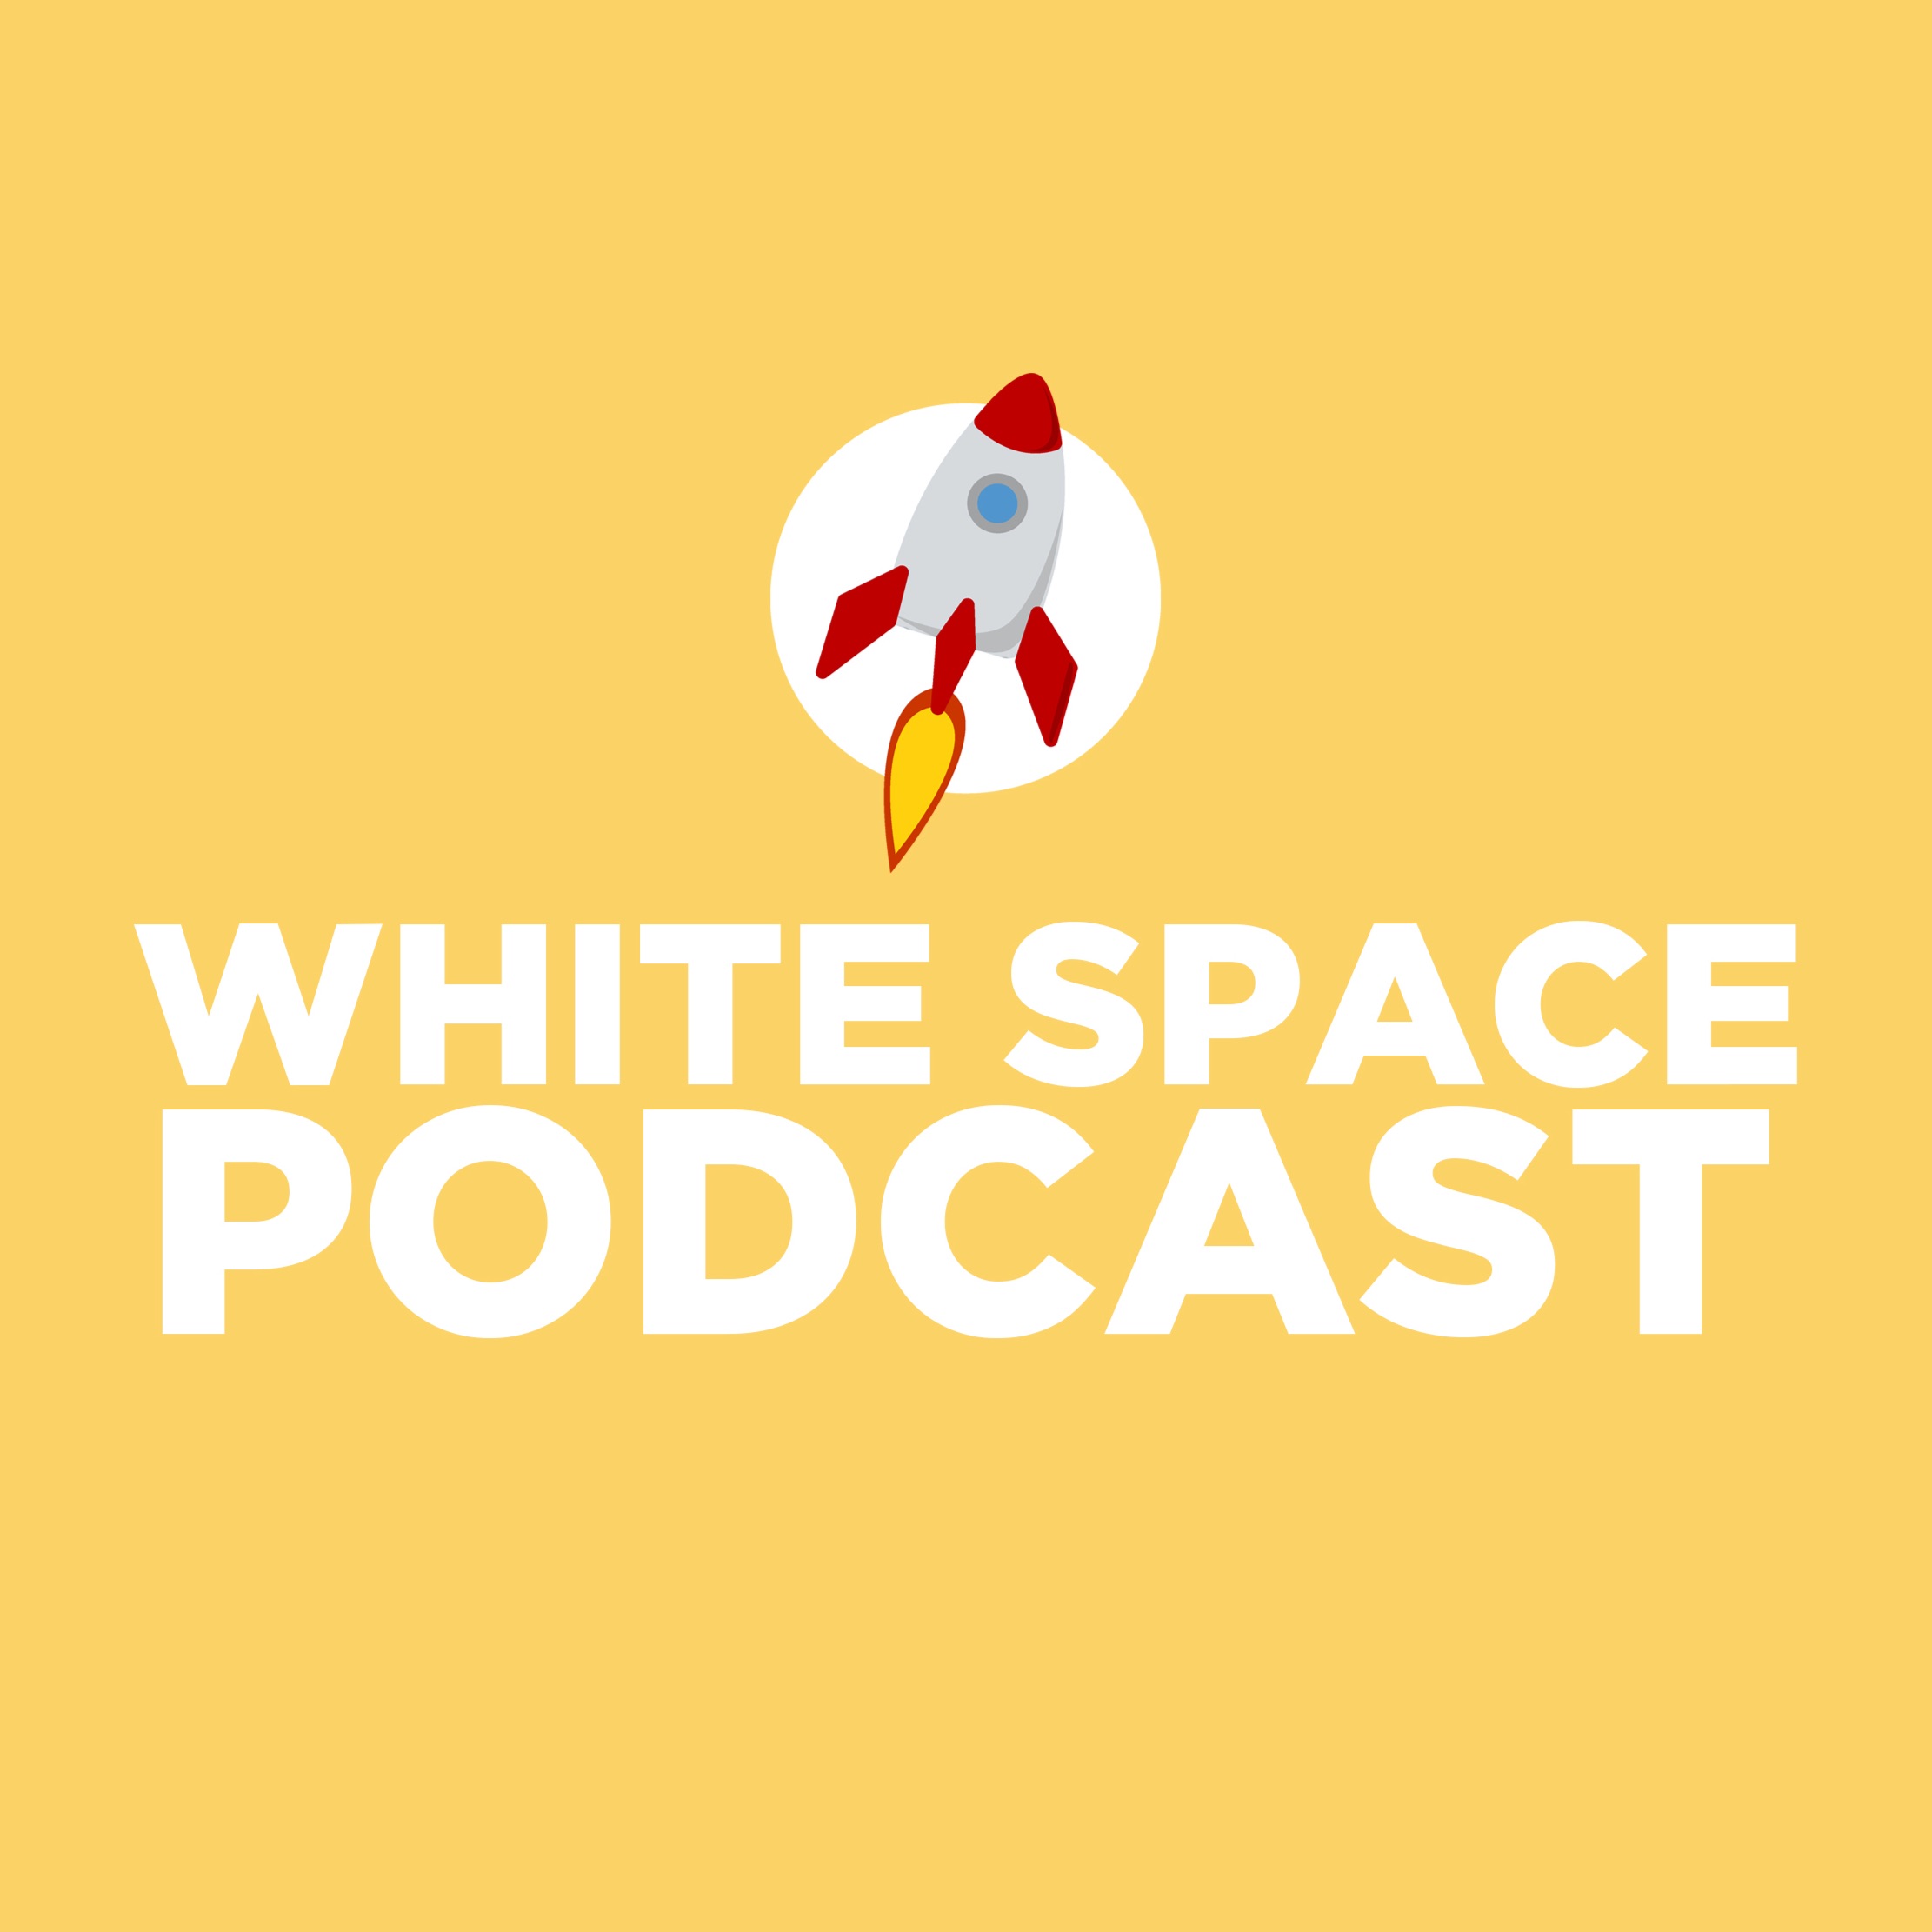 WHITE SPACE